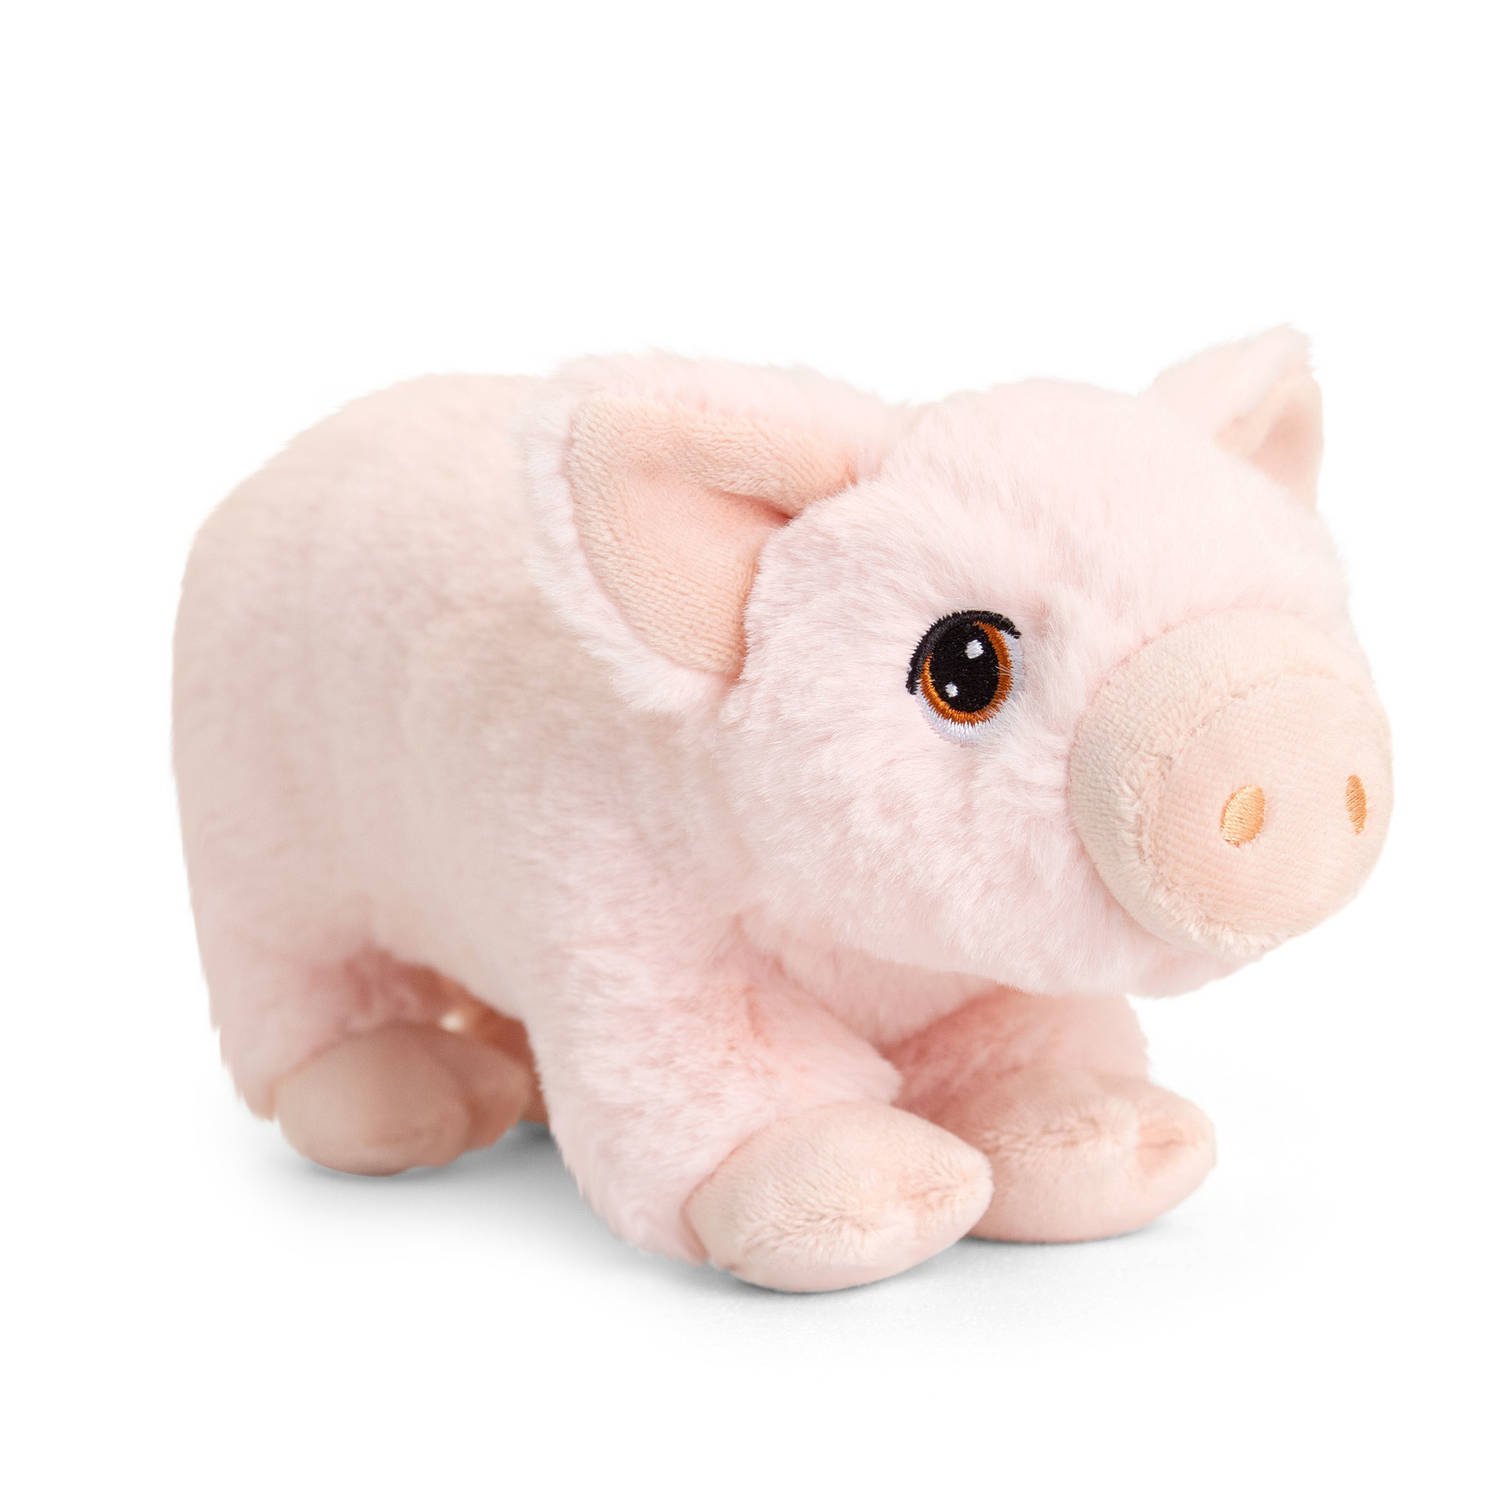 Pluche knuffel dieren roze varken/biggetje 18 cm - Knuffelbeesten - Boerderij dieren speelgoed